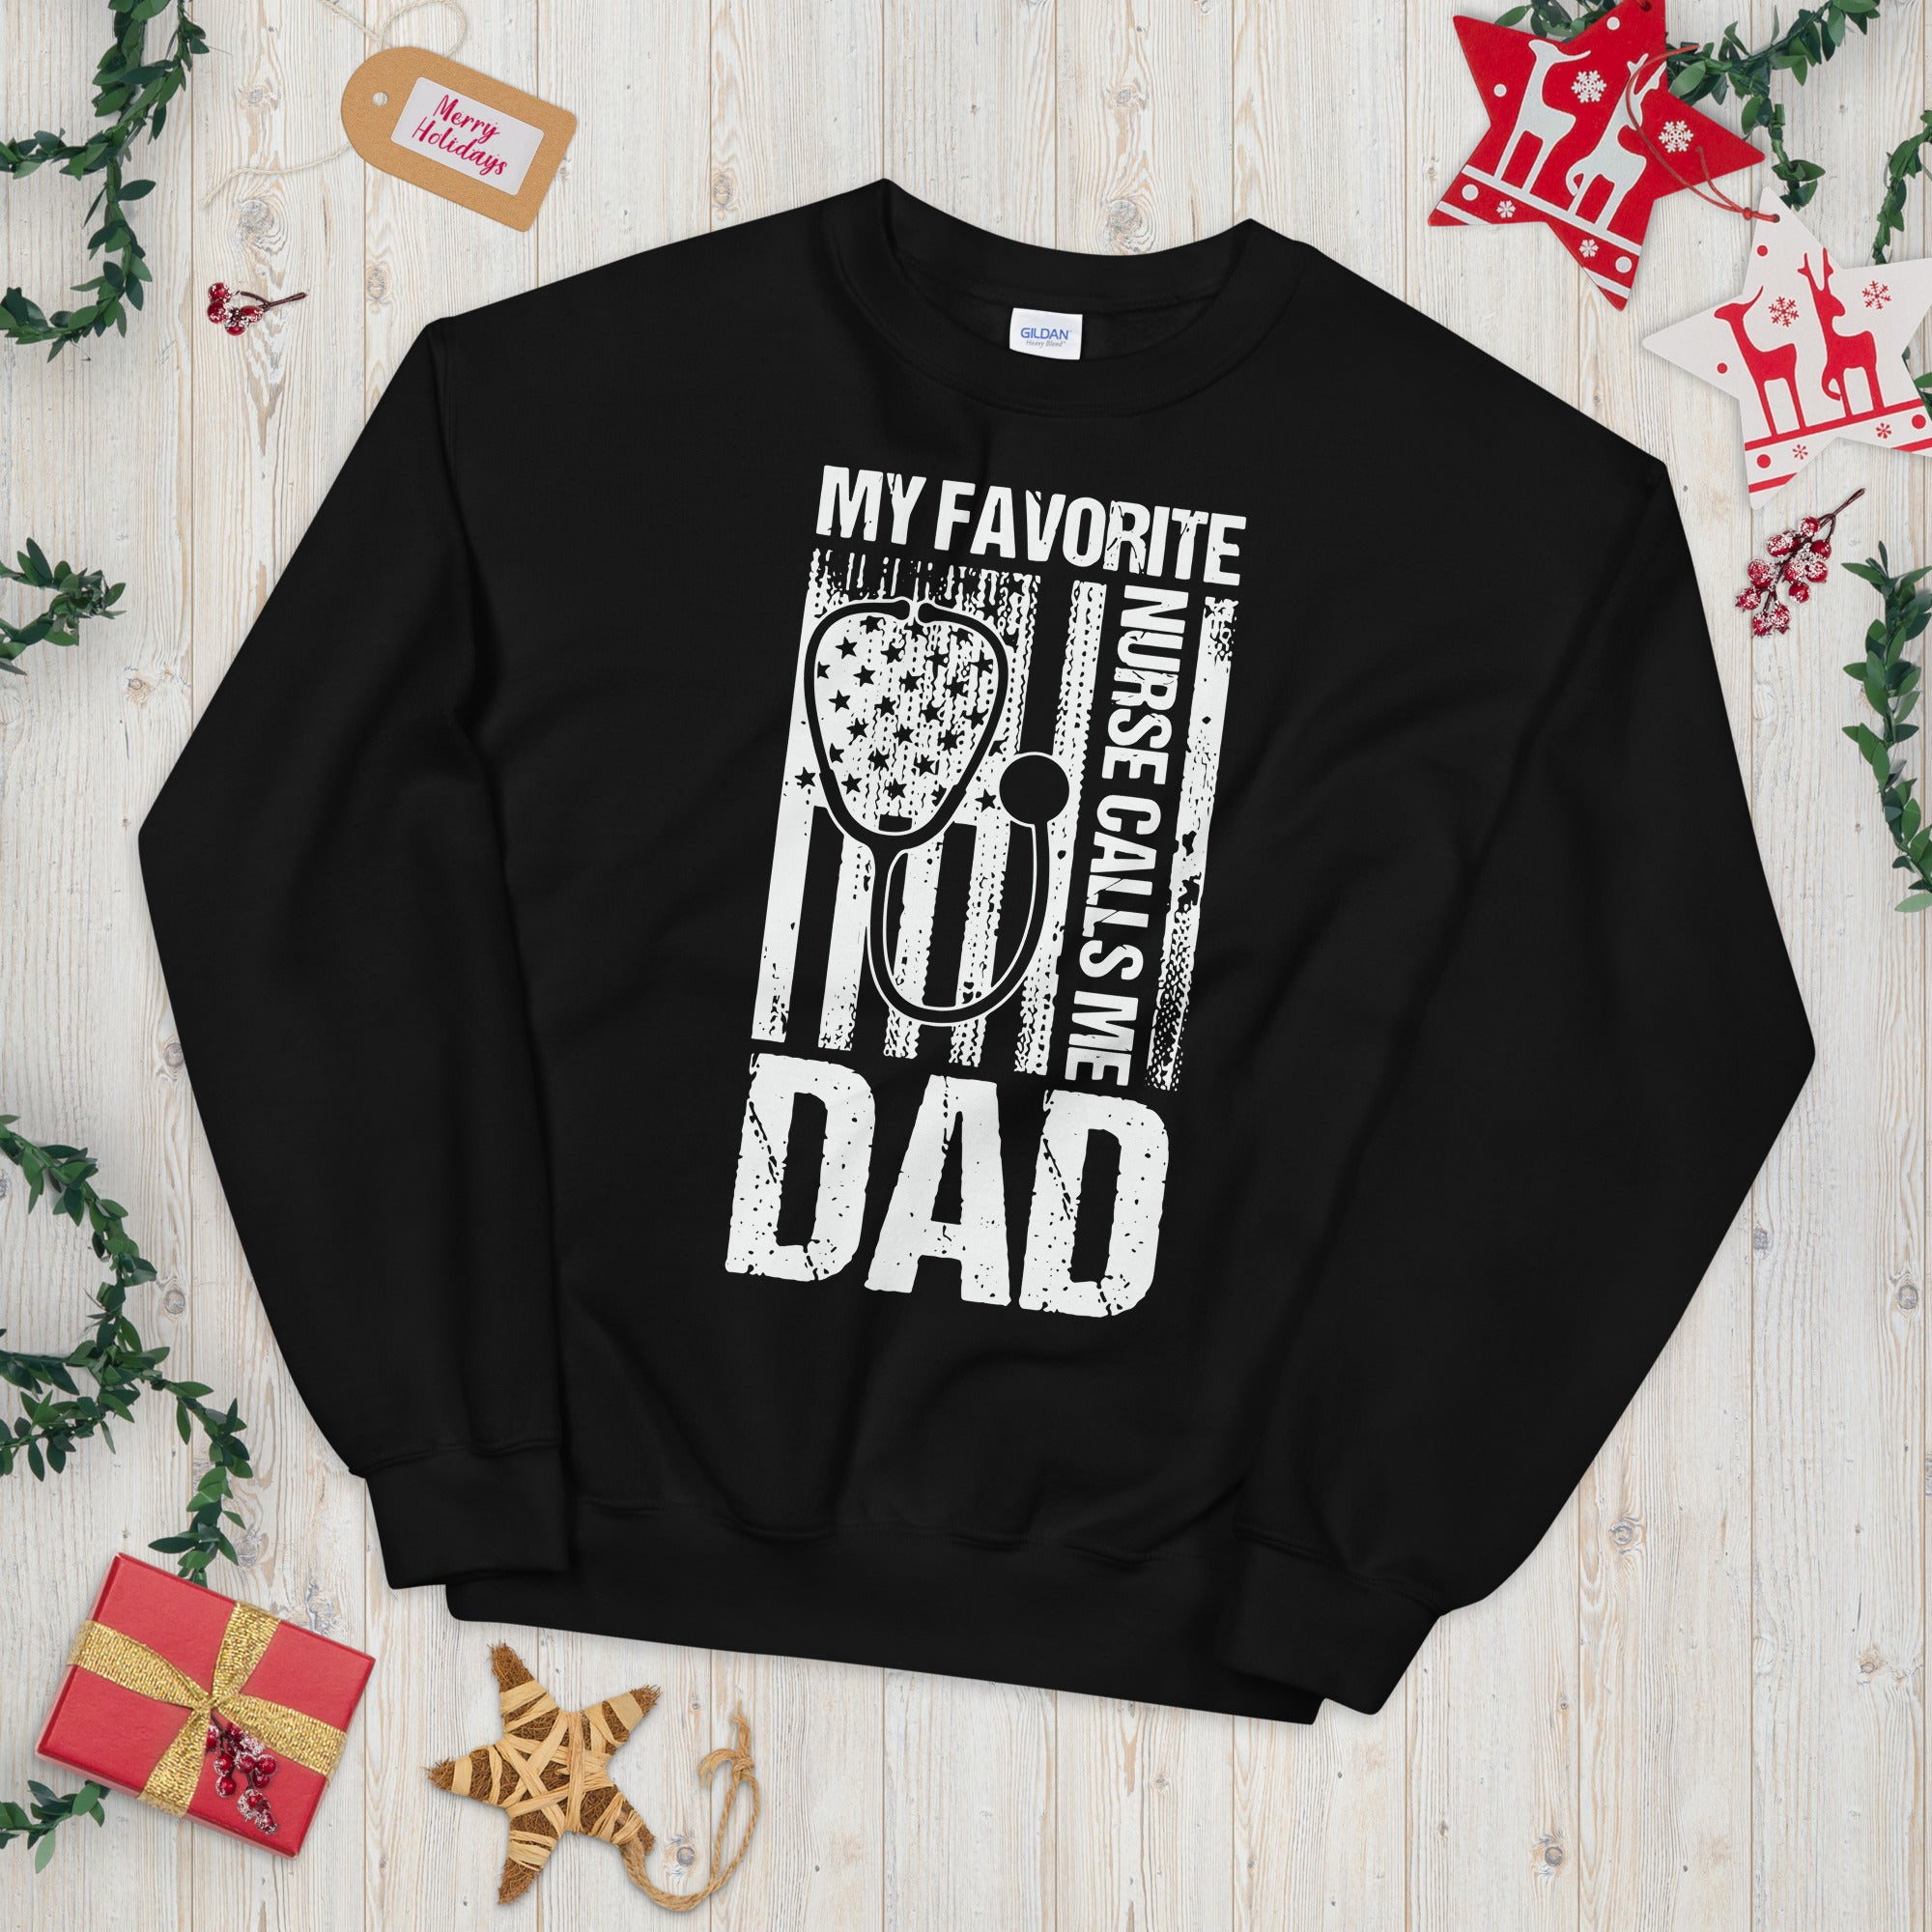 My Favorite Nurse Calls Me Dad Sweatshirt, Dad of a Nurse, Nurse Dad Gift, Nurse Dad Shirt, Father Daughter Gifts